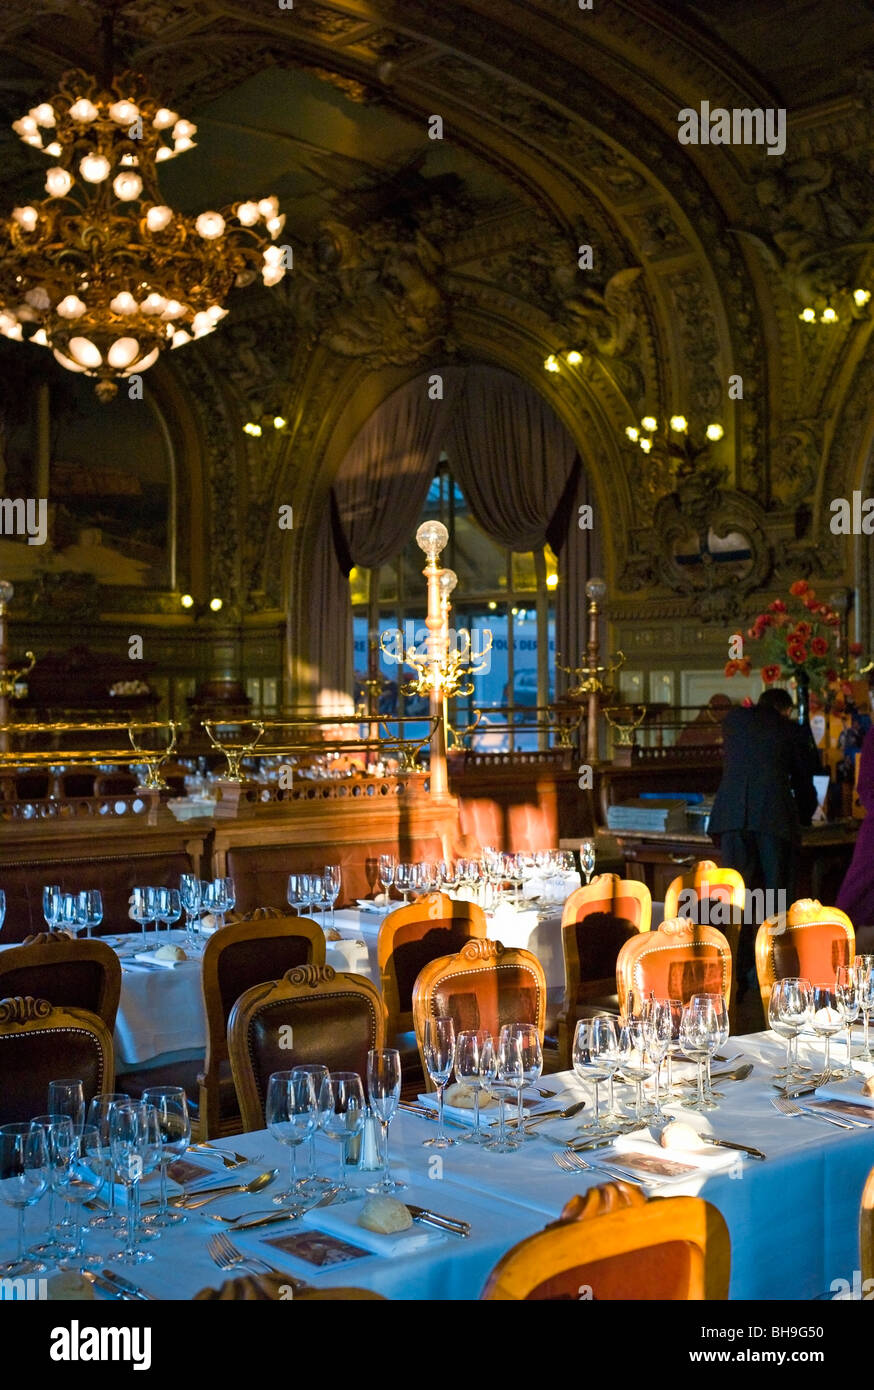 Train Blue restaurant interior, Gare de Lyon, Paris, France Stock Photo